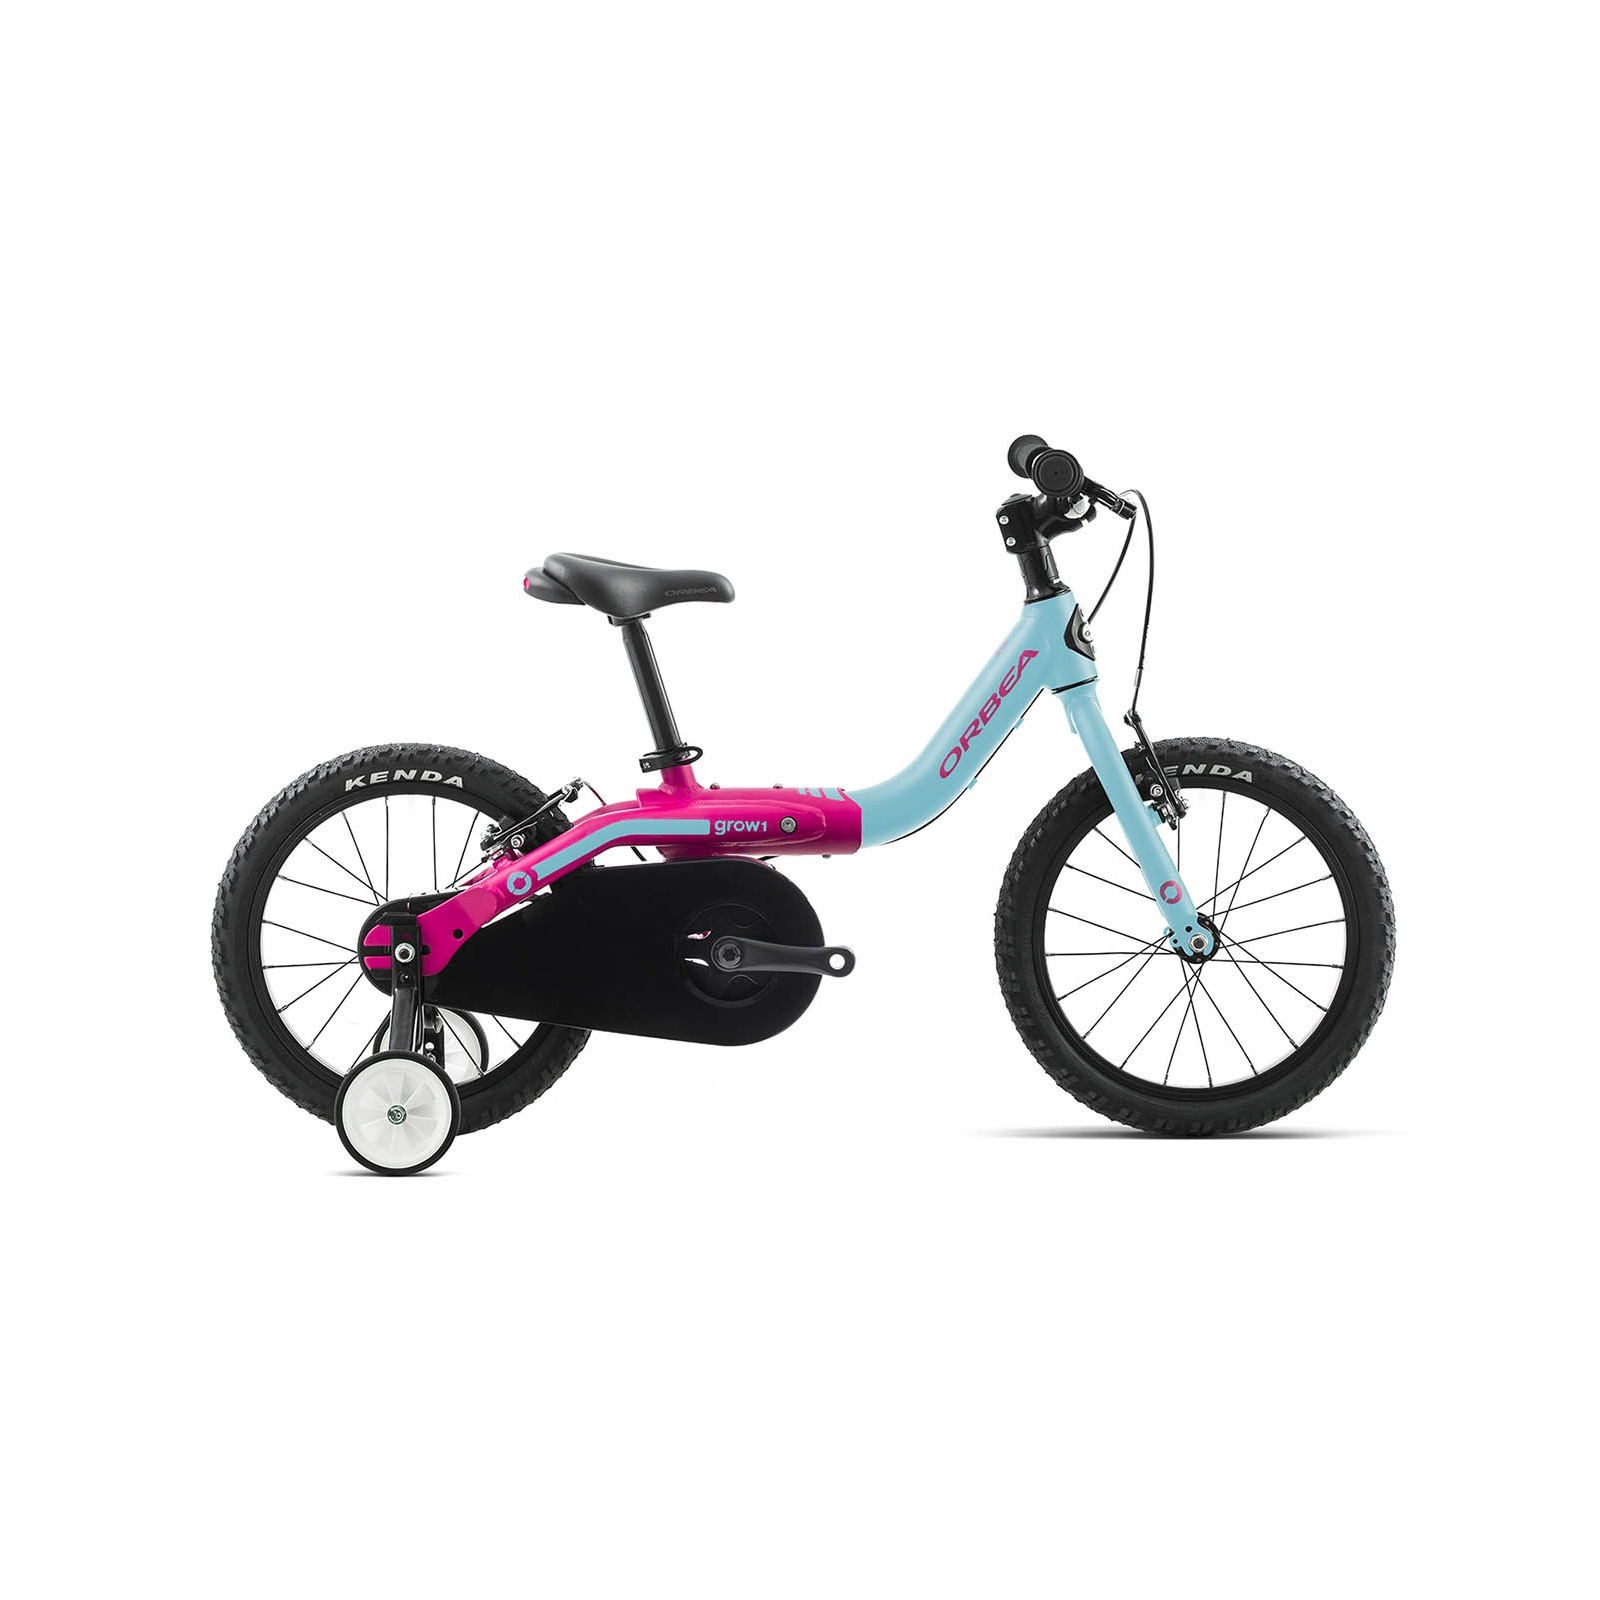 Детский велосипед Orbea Grow 1 16" 2019 Blue - Pink (J00216K5)